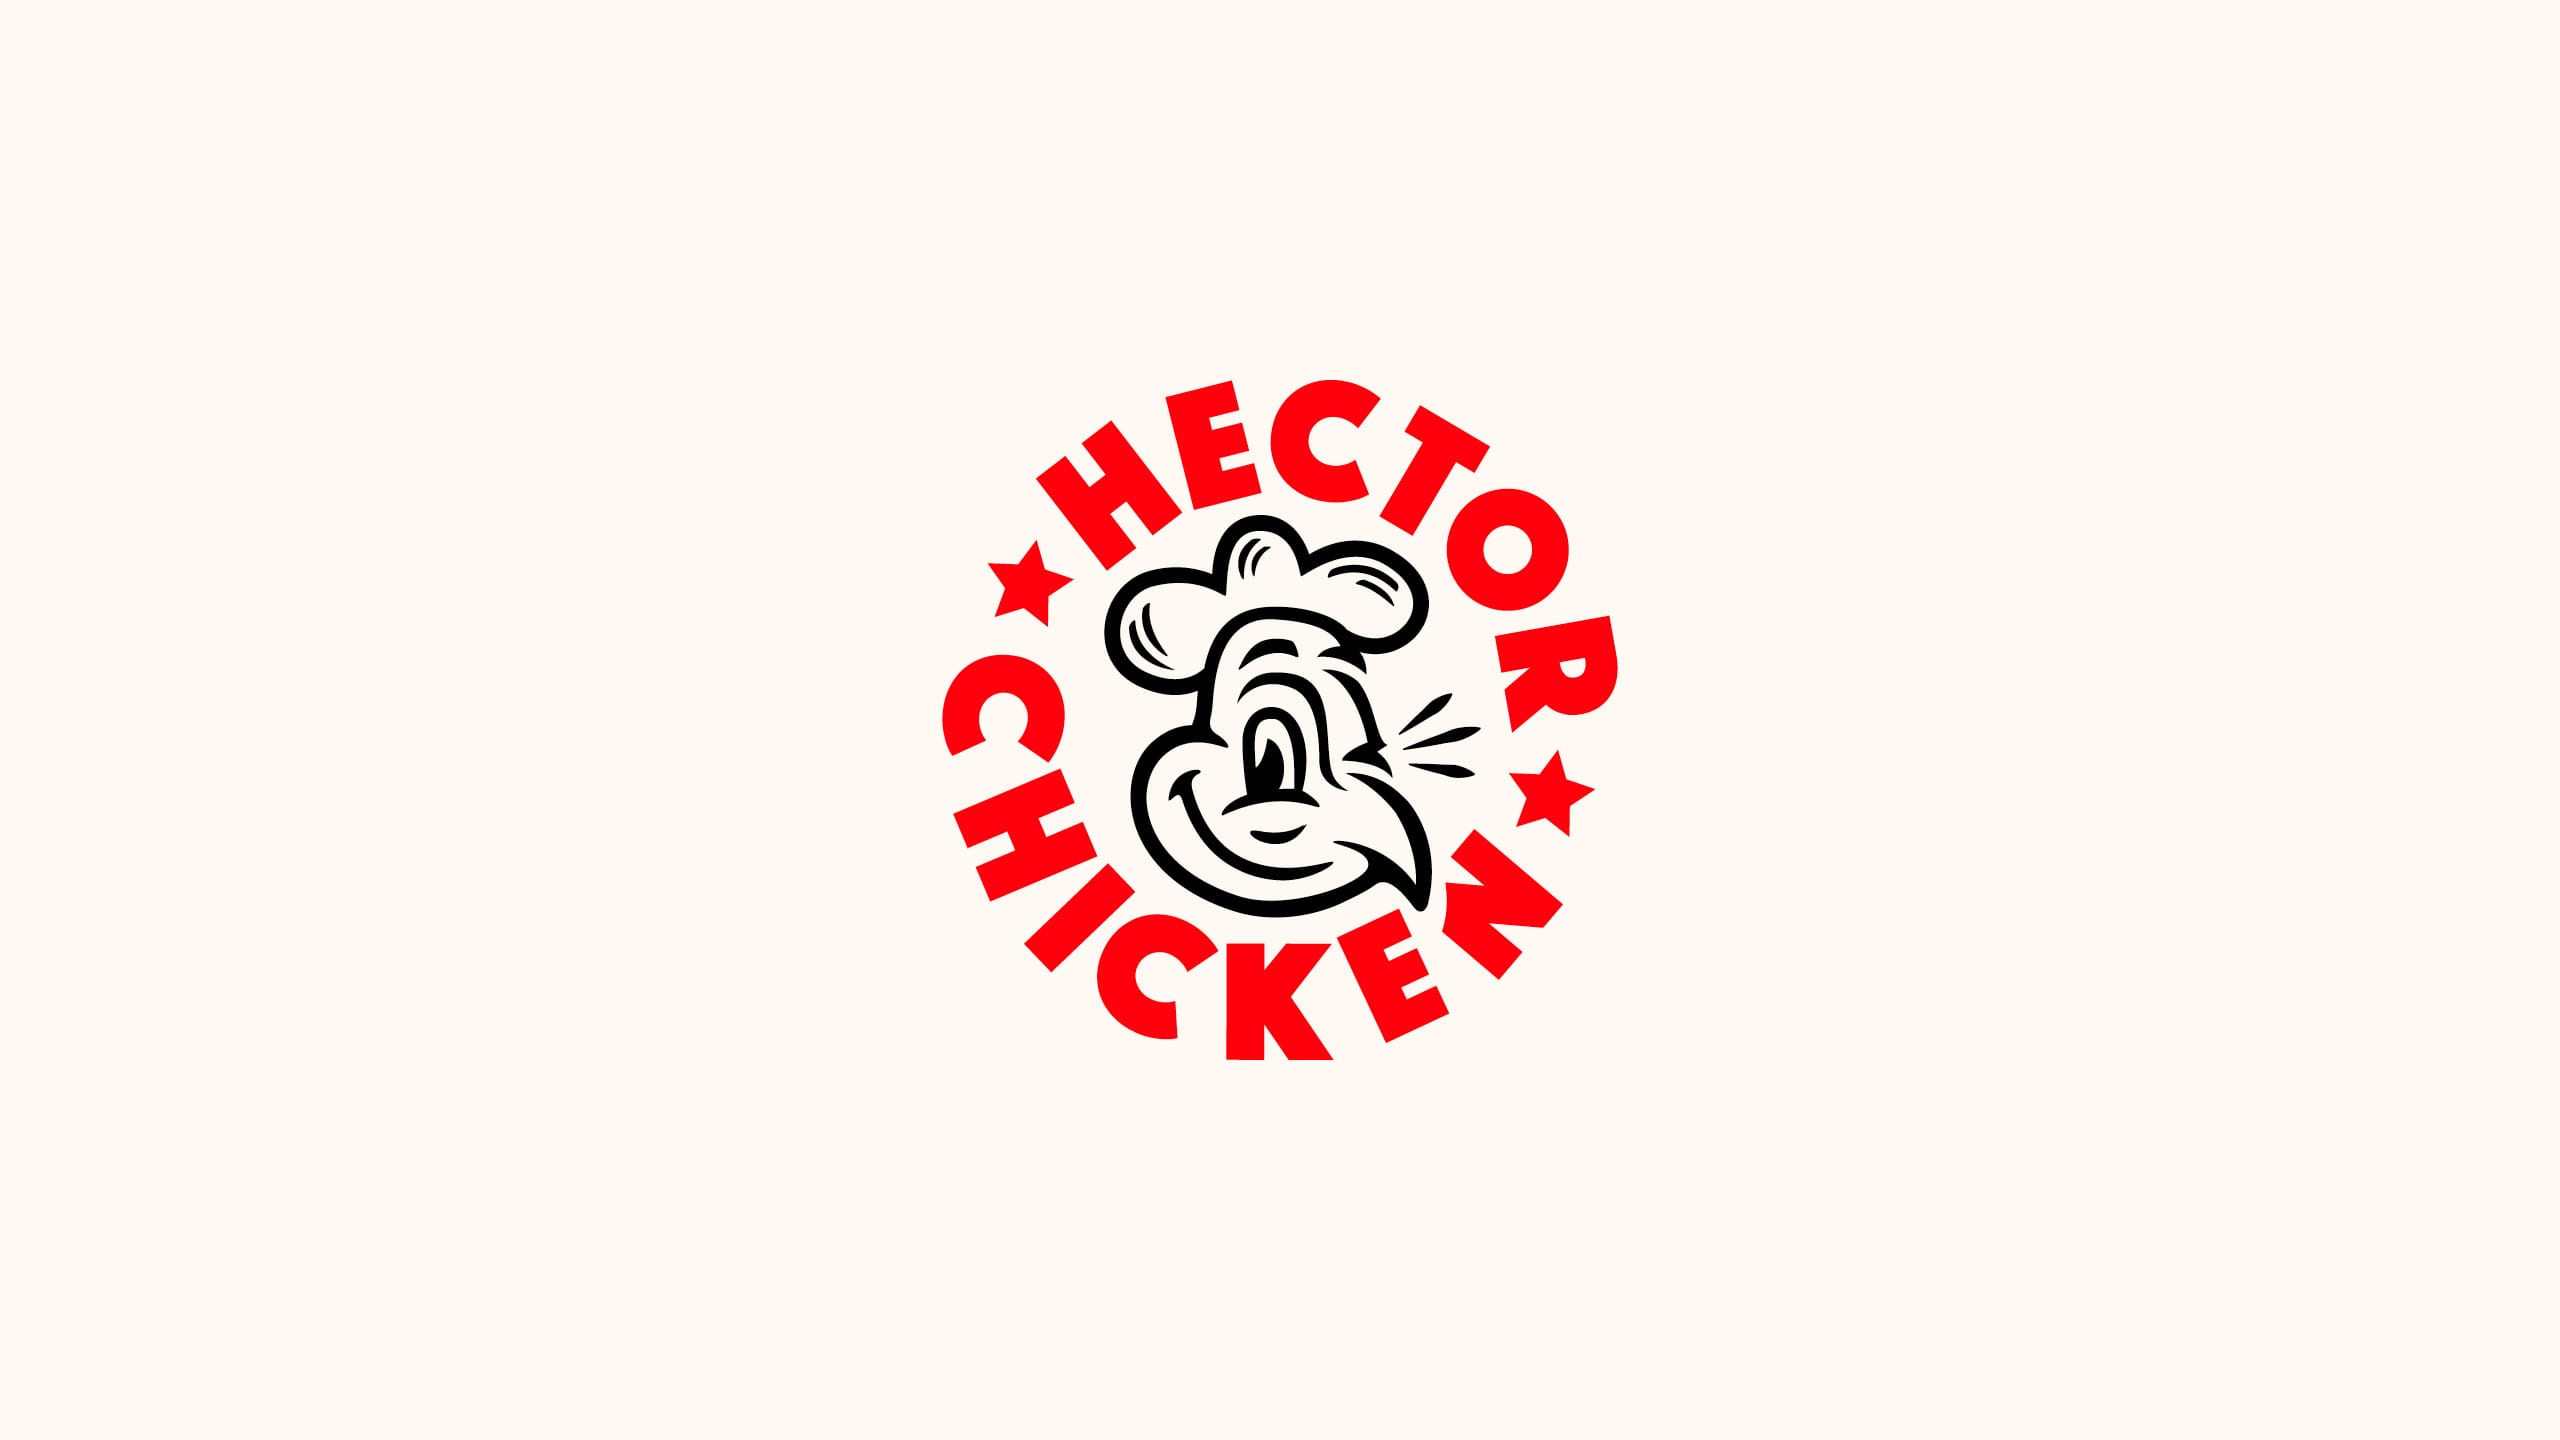 Hector-chicken-brand-identity-logo-1